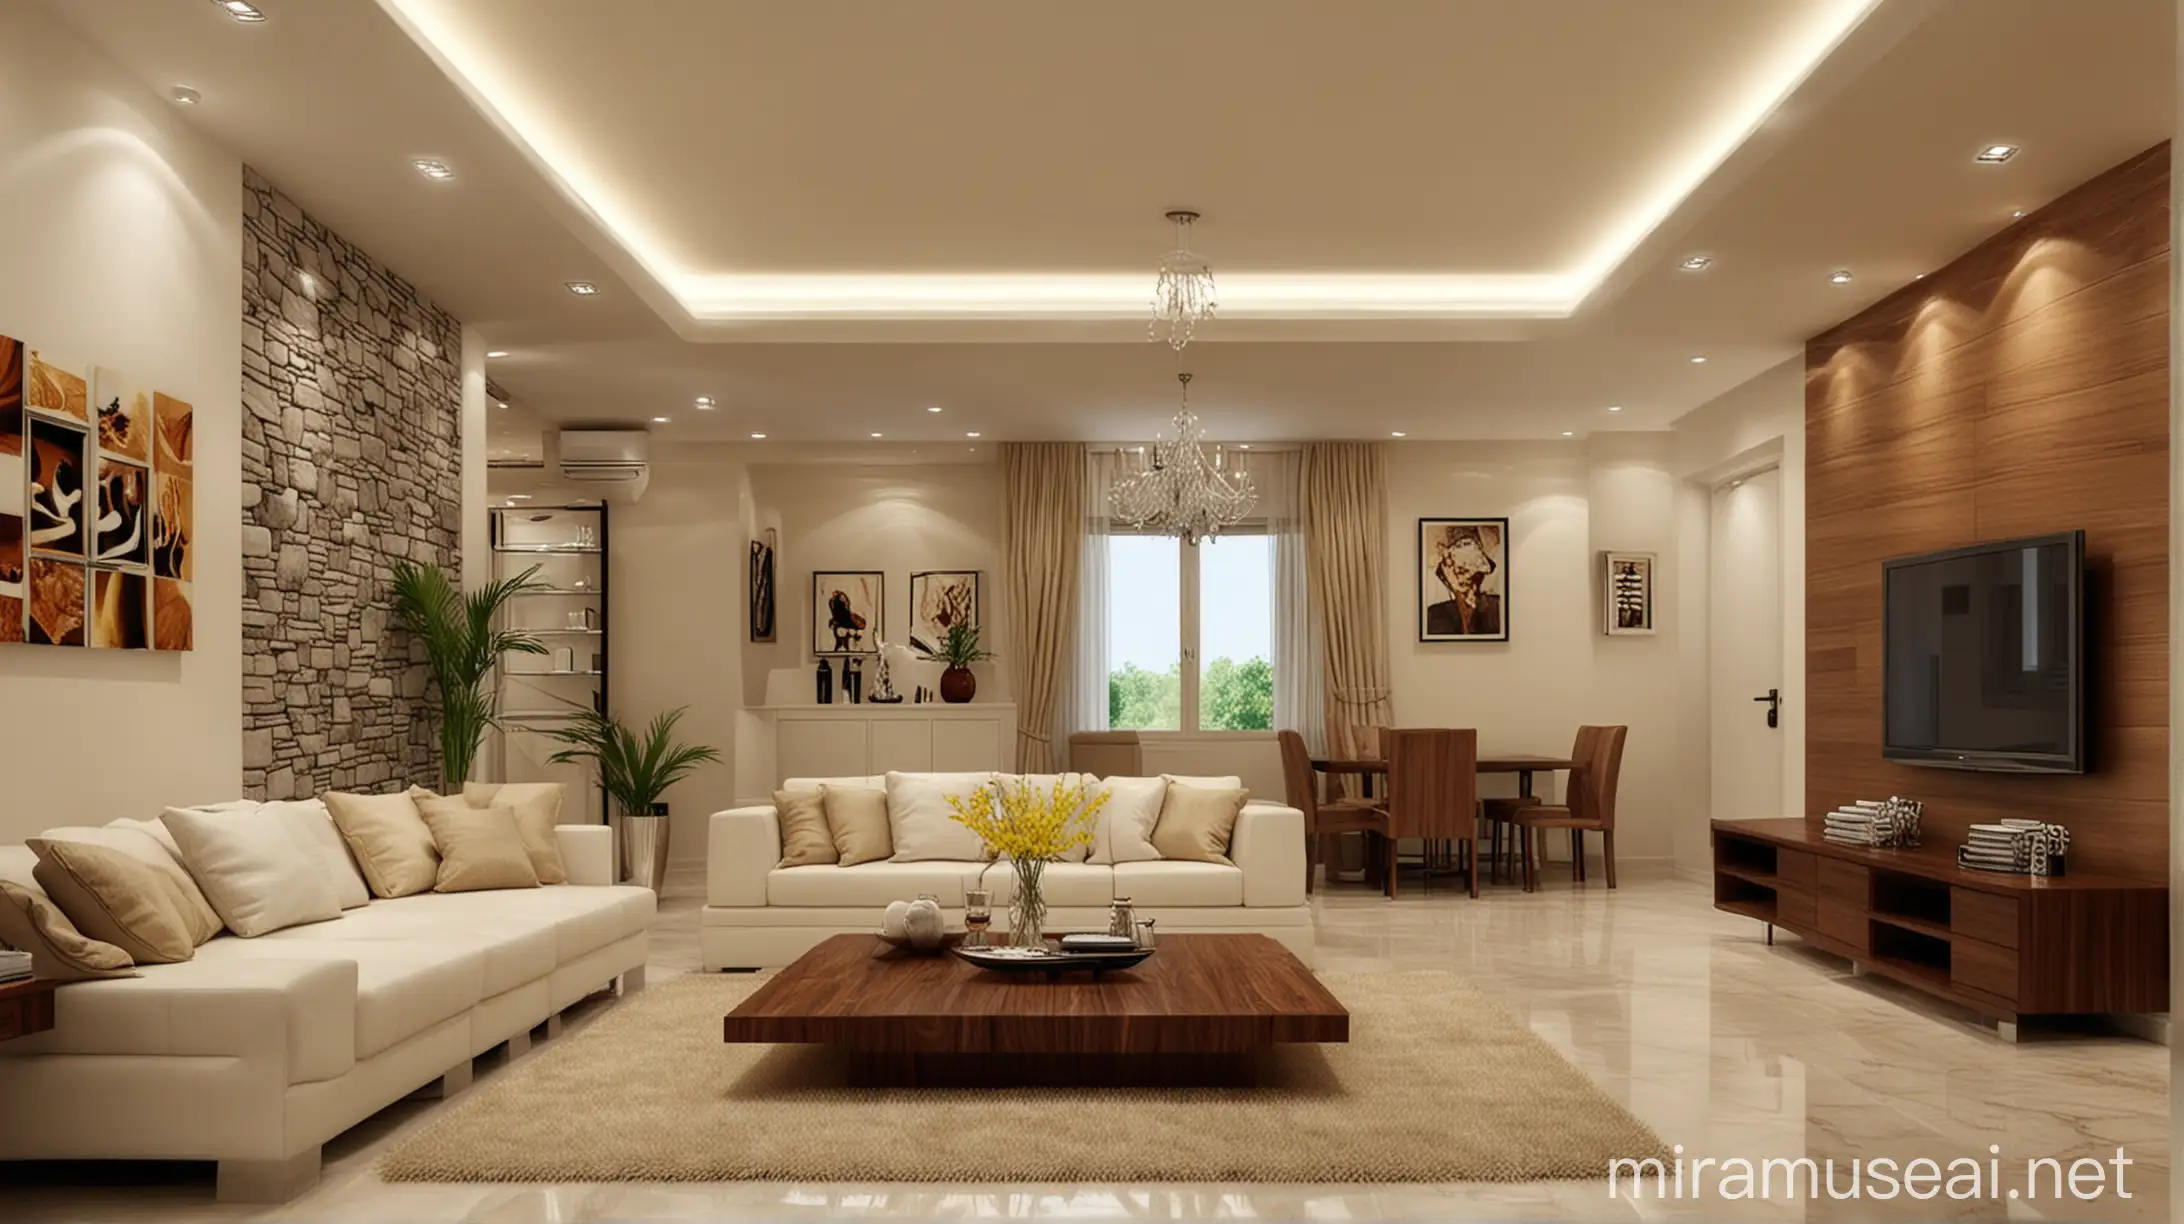 Modern Home Interior Design with Minimalist Decor